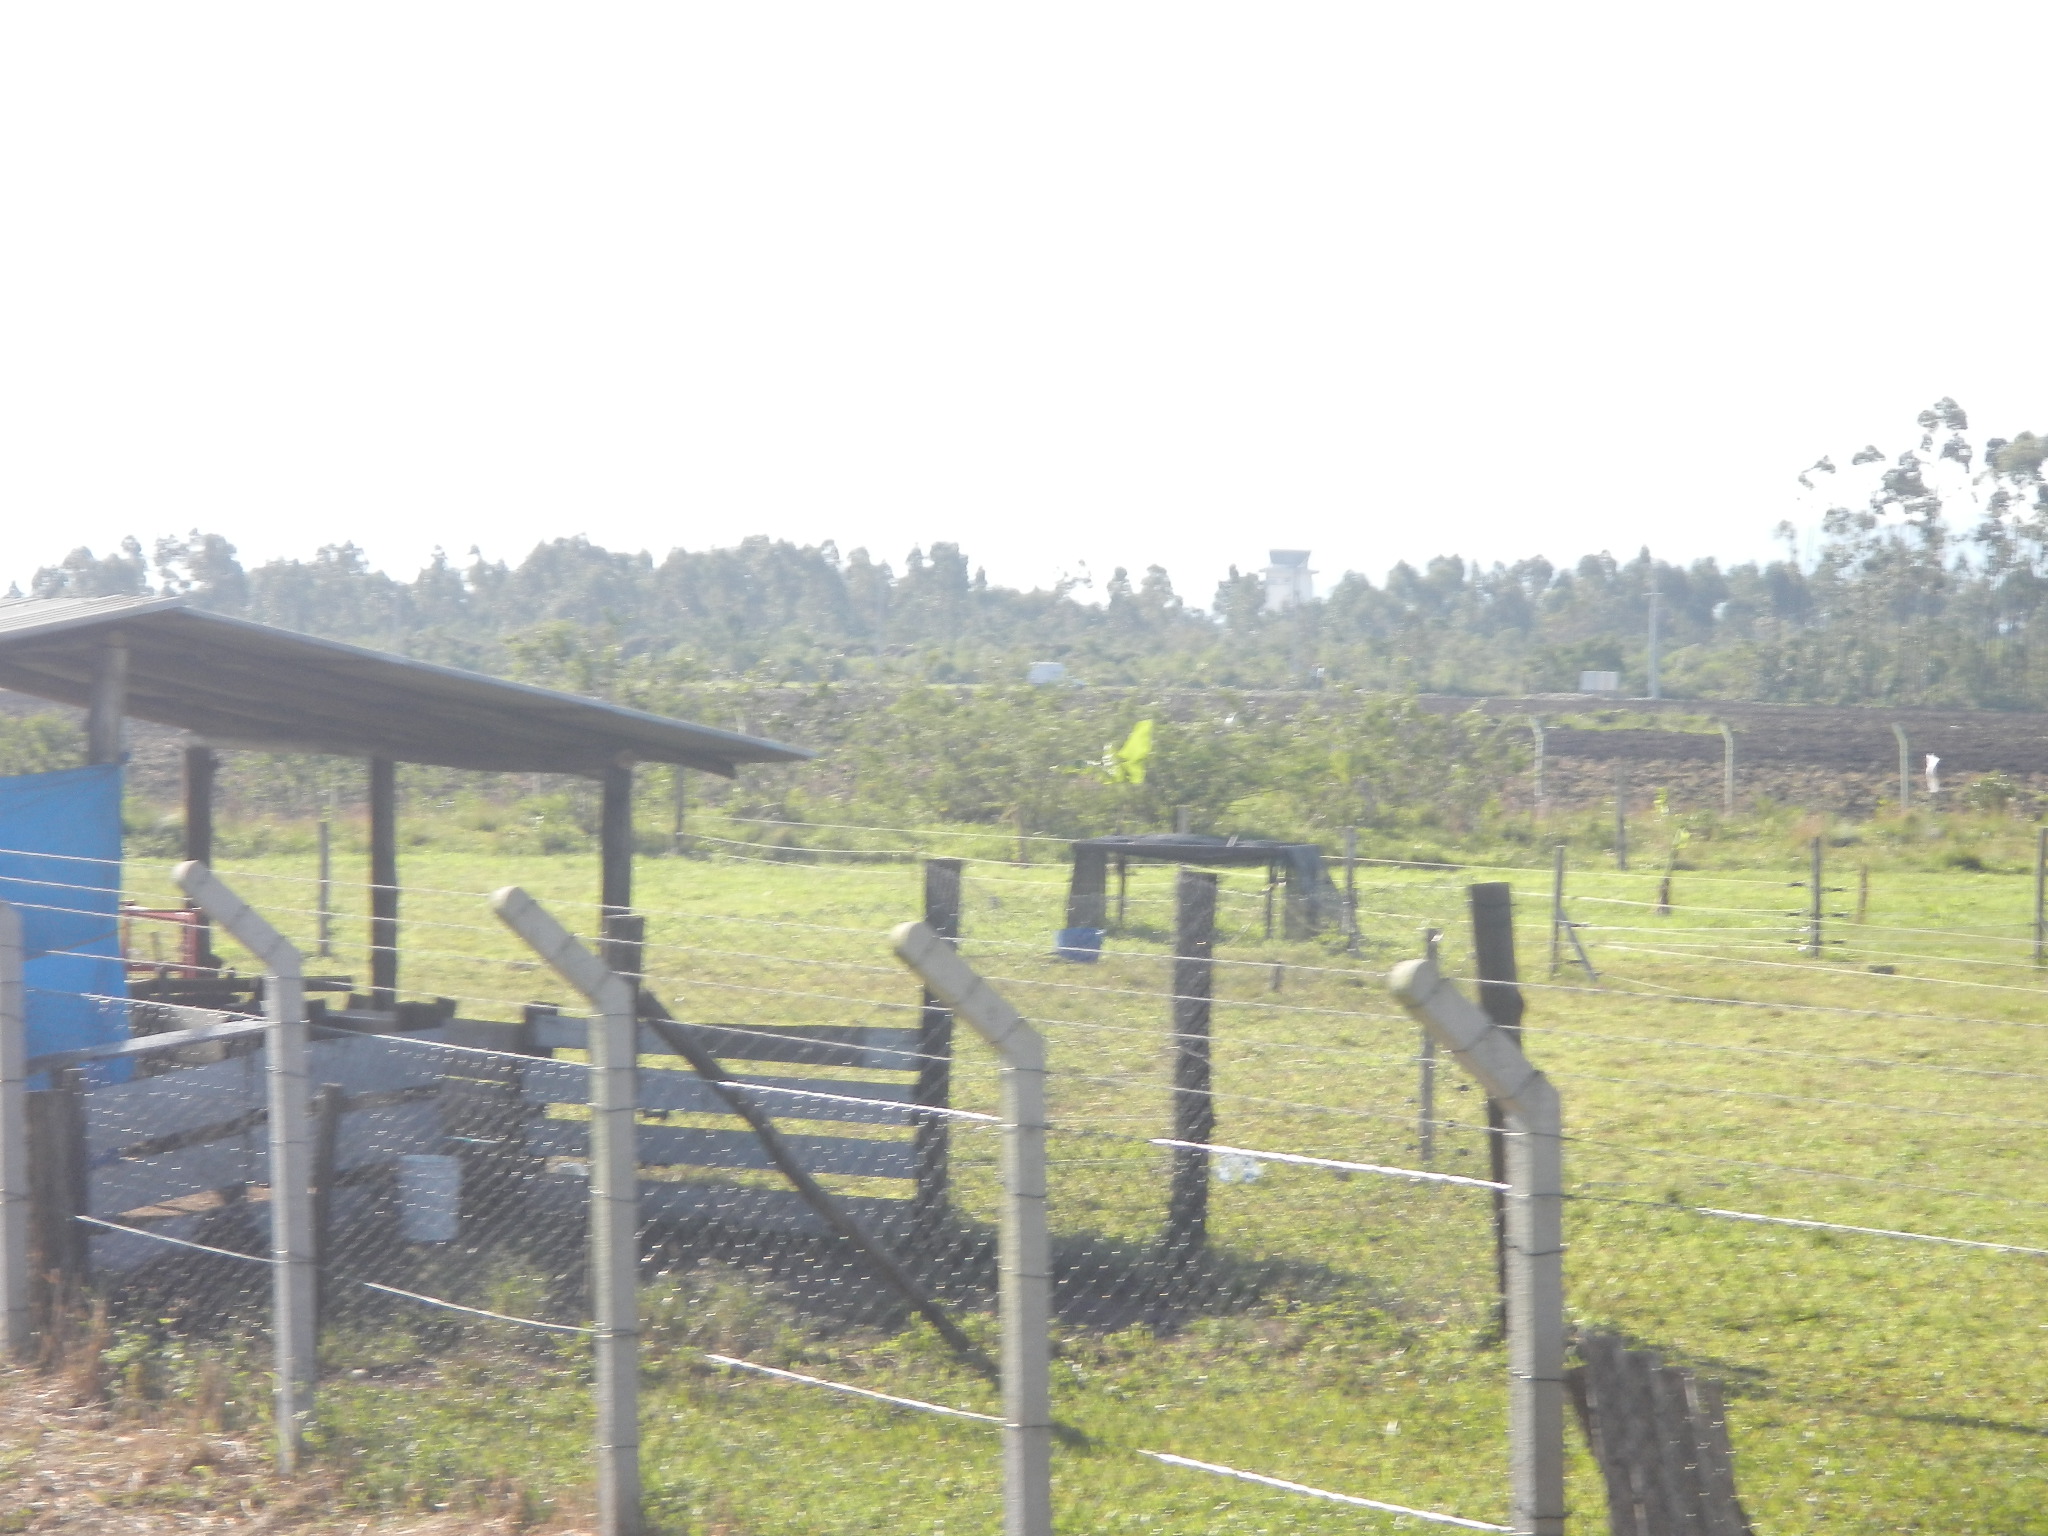 20150703 Fazenda Ovinocultura ovelhas pastagem centro manejo old 004.jpg